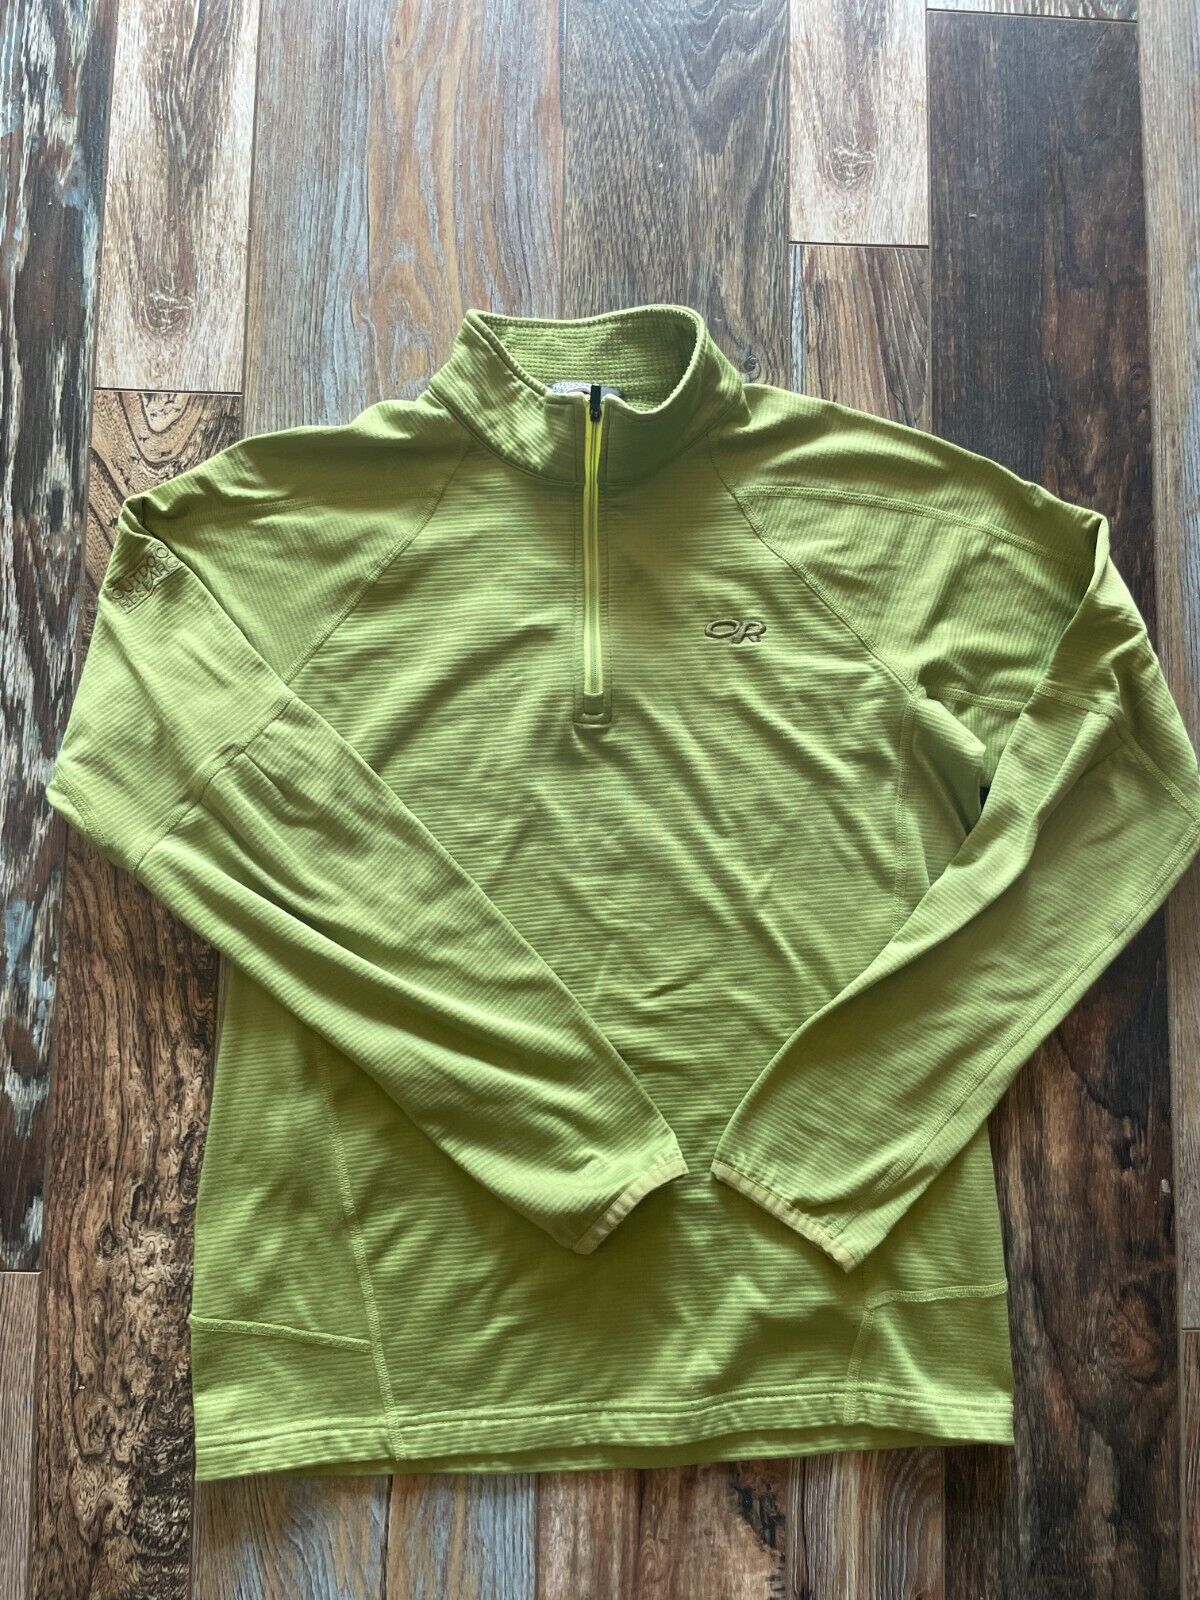 Outdoor Research Men's Small Radiant LT Zipper pullover fleece Light Green EUC